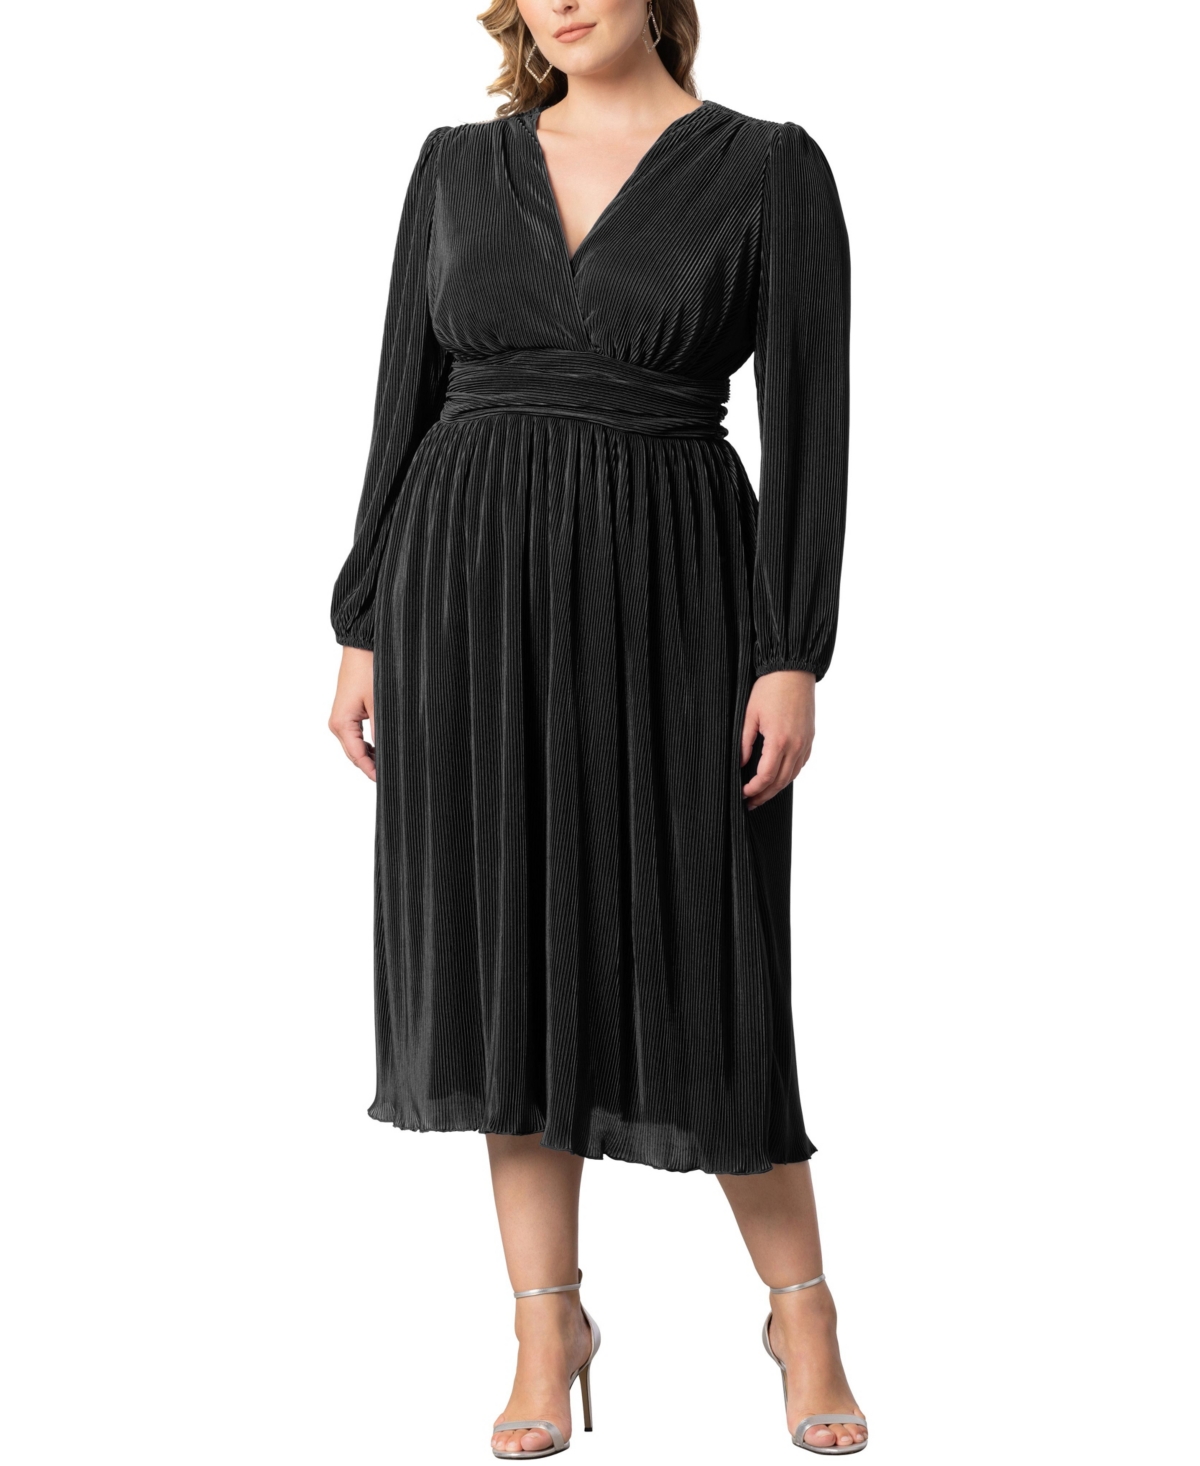 Women's Plus Size Sophie Pleated Cocktail Dress - Onyx